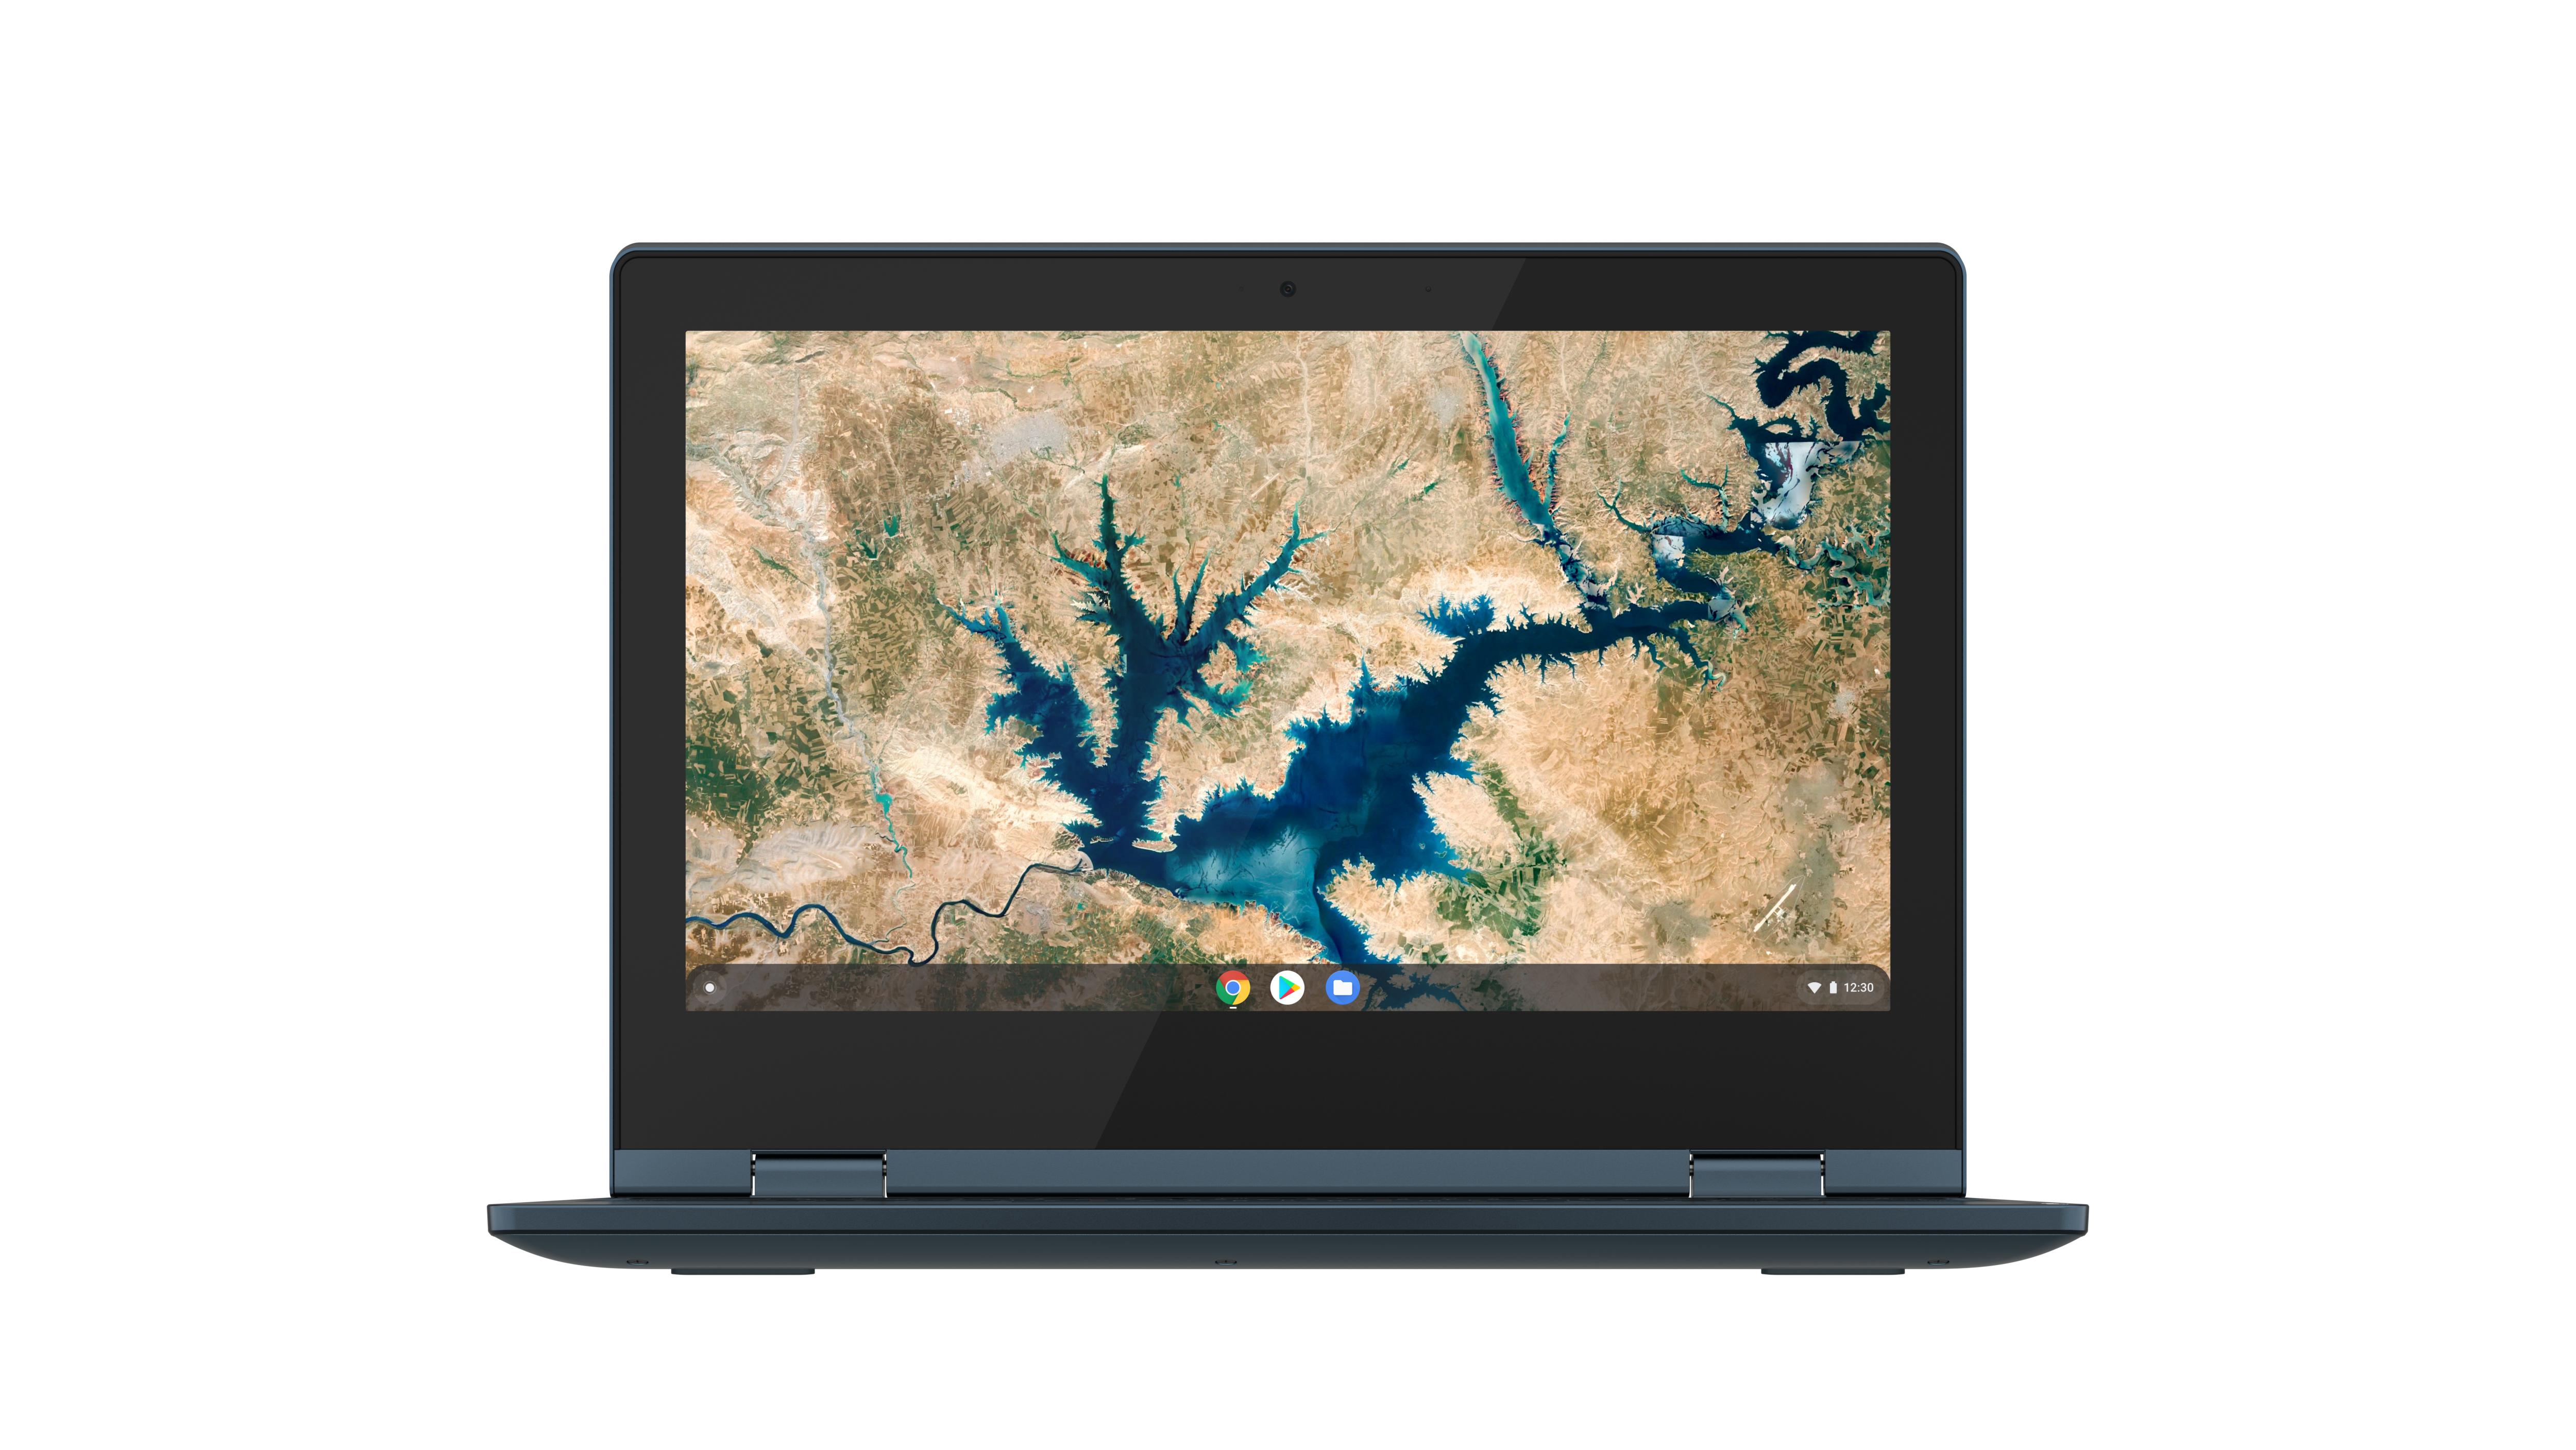 Lenovo Ideapad Flex 3 Chromebook - 11.6" Touchscreen 2-in-1 - Intel Celeron N4020 - 4GB - 32GB eMMC - Abyss Blue - Chrome OS - 82BB0009US - image 5 of 13